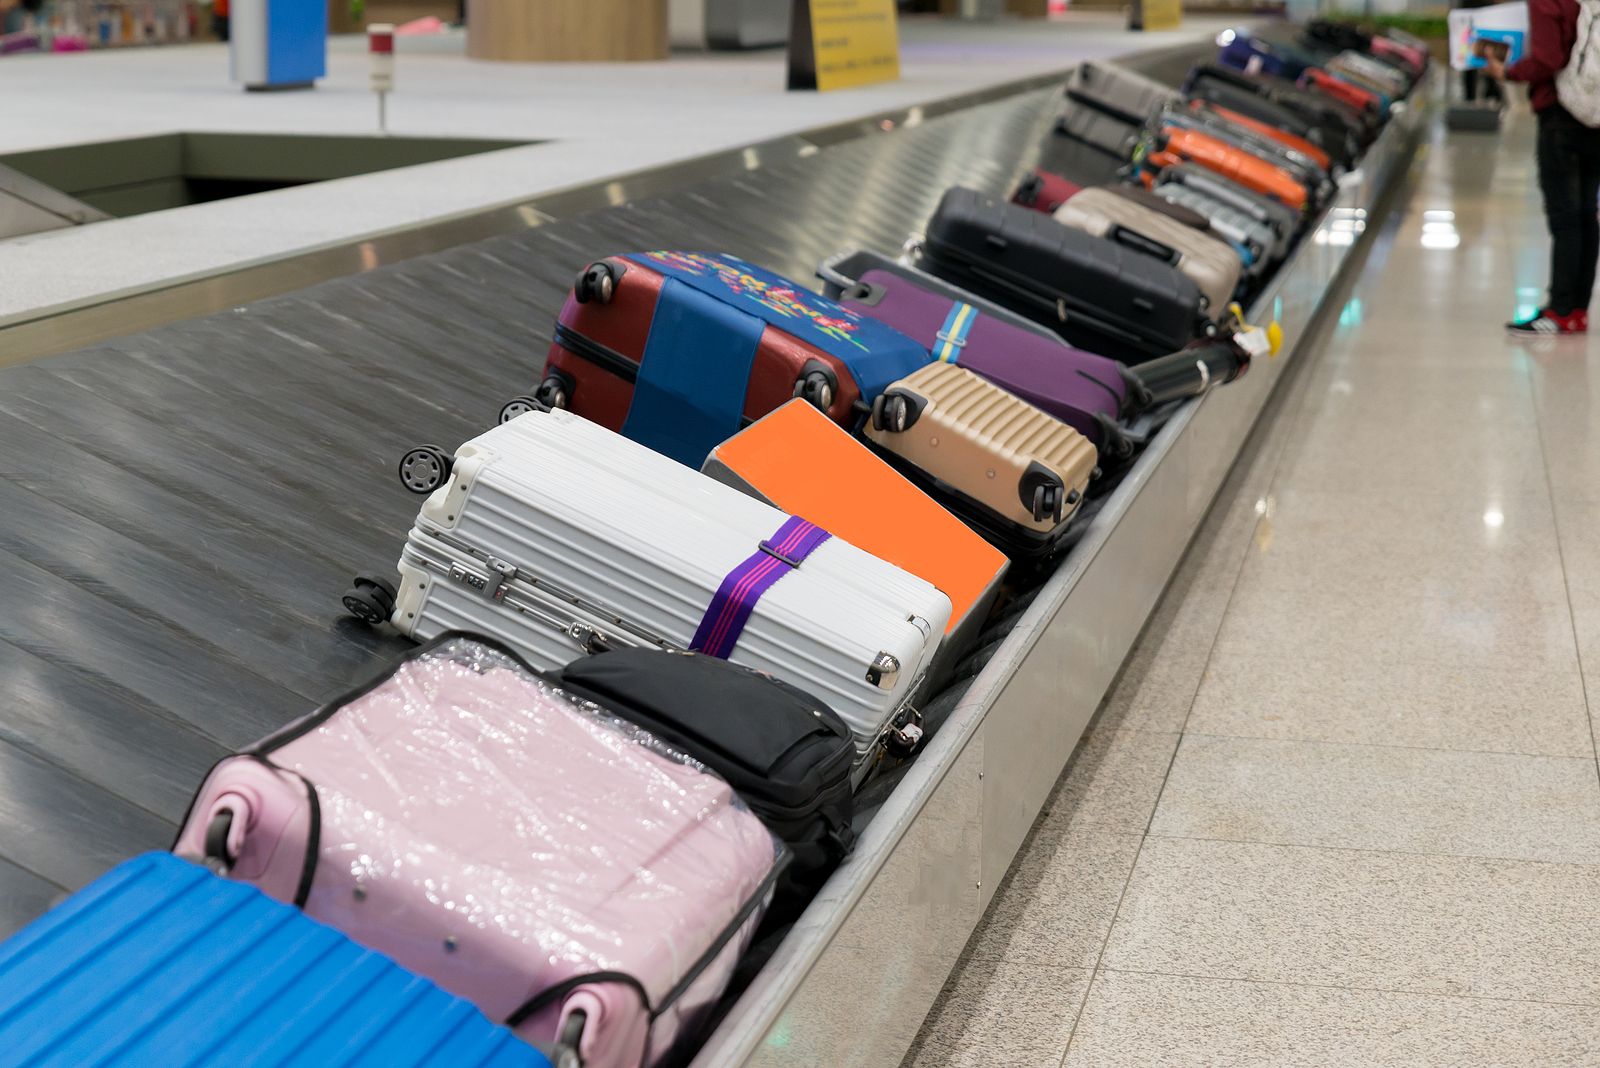 Los dos aeropuertos de toda Europa que pierden más maletas están en España